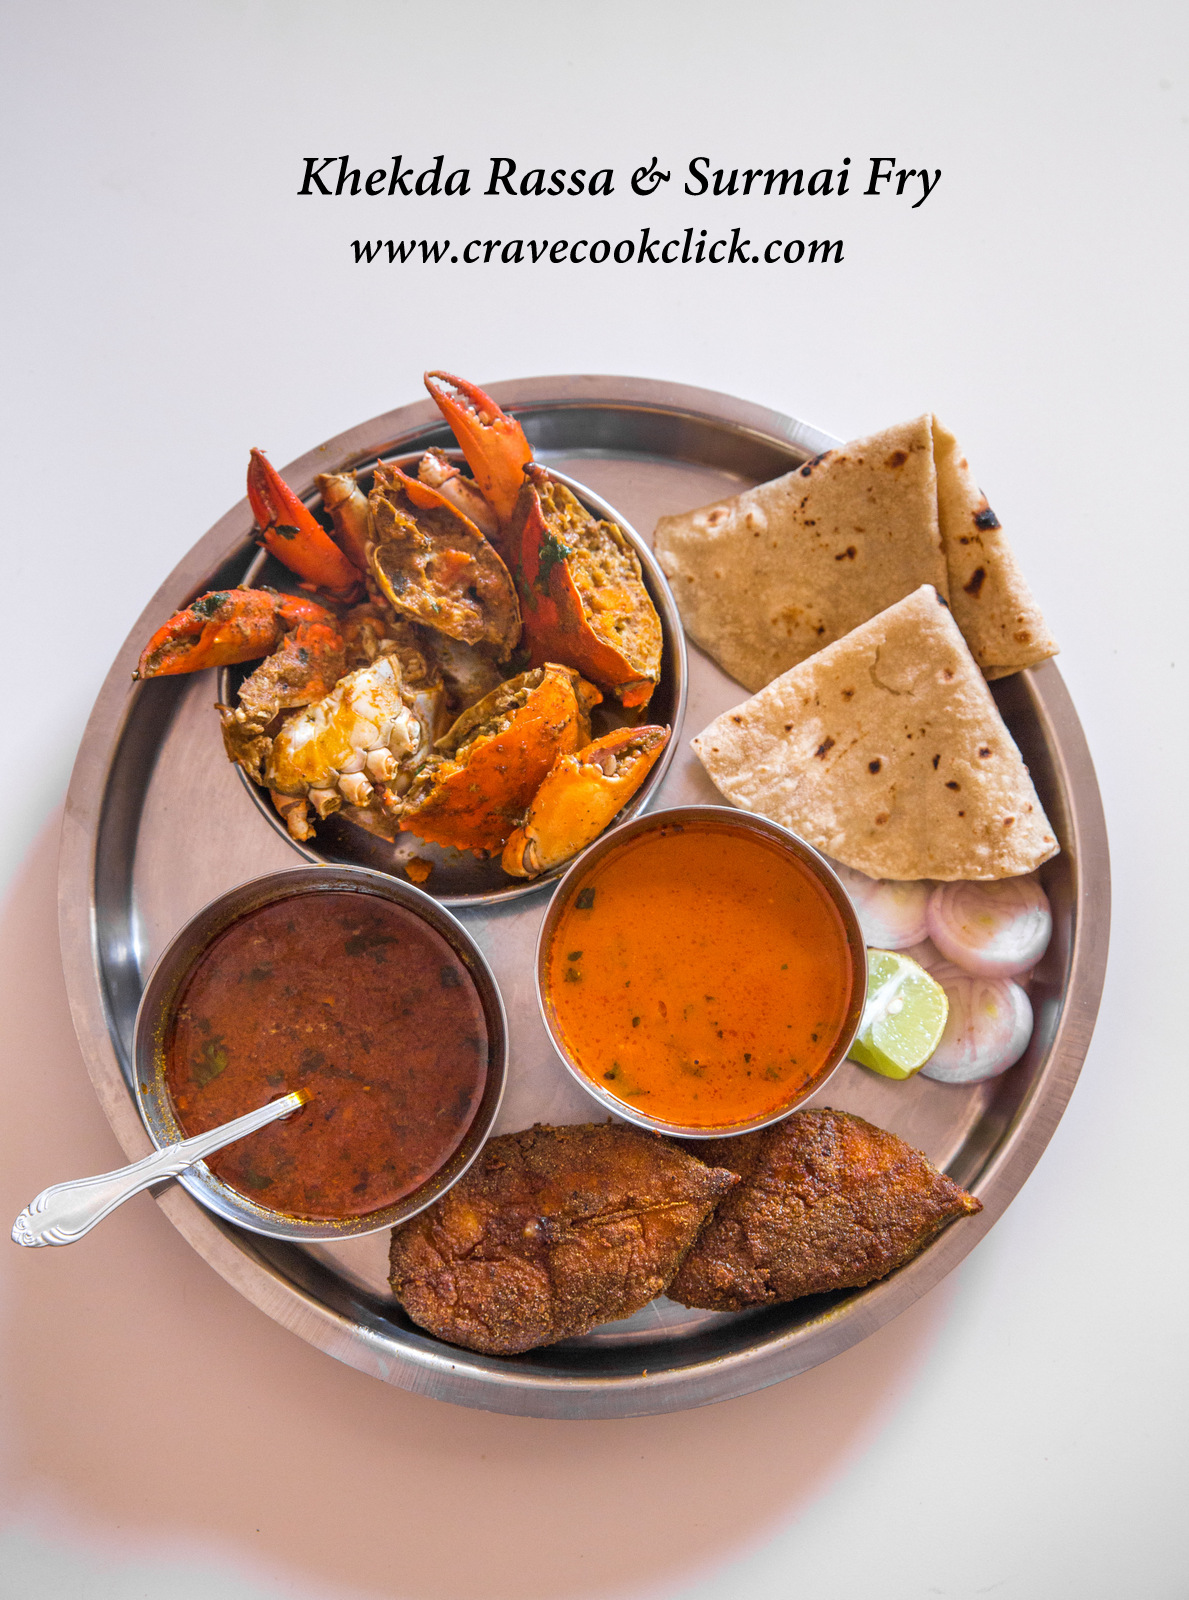 malavani recipes, crab curry, khekda rassa, indian recipes, food photography, seafood recipes, surmai fish fry, fish fry, indian non vegetarian recipes, traditional indian recipes